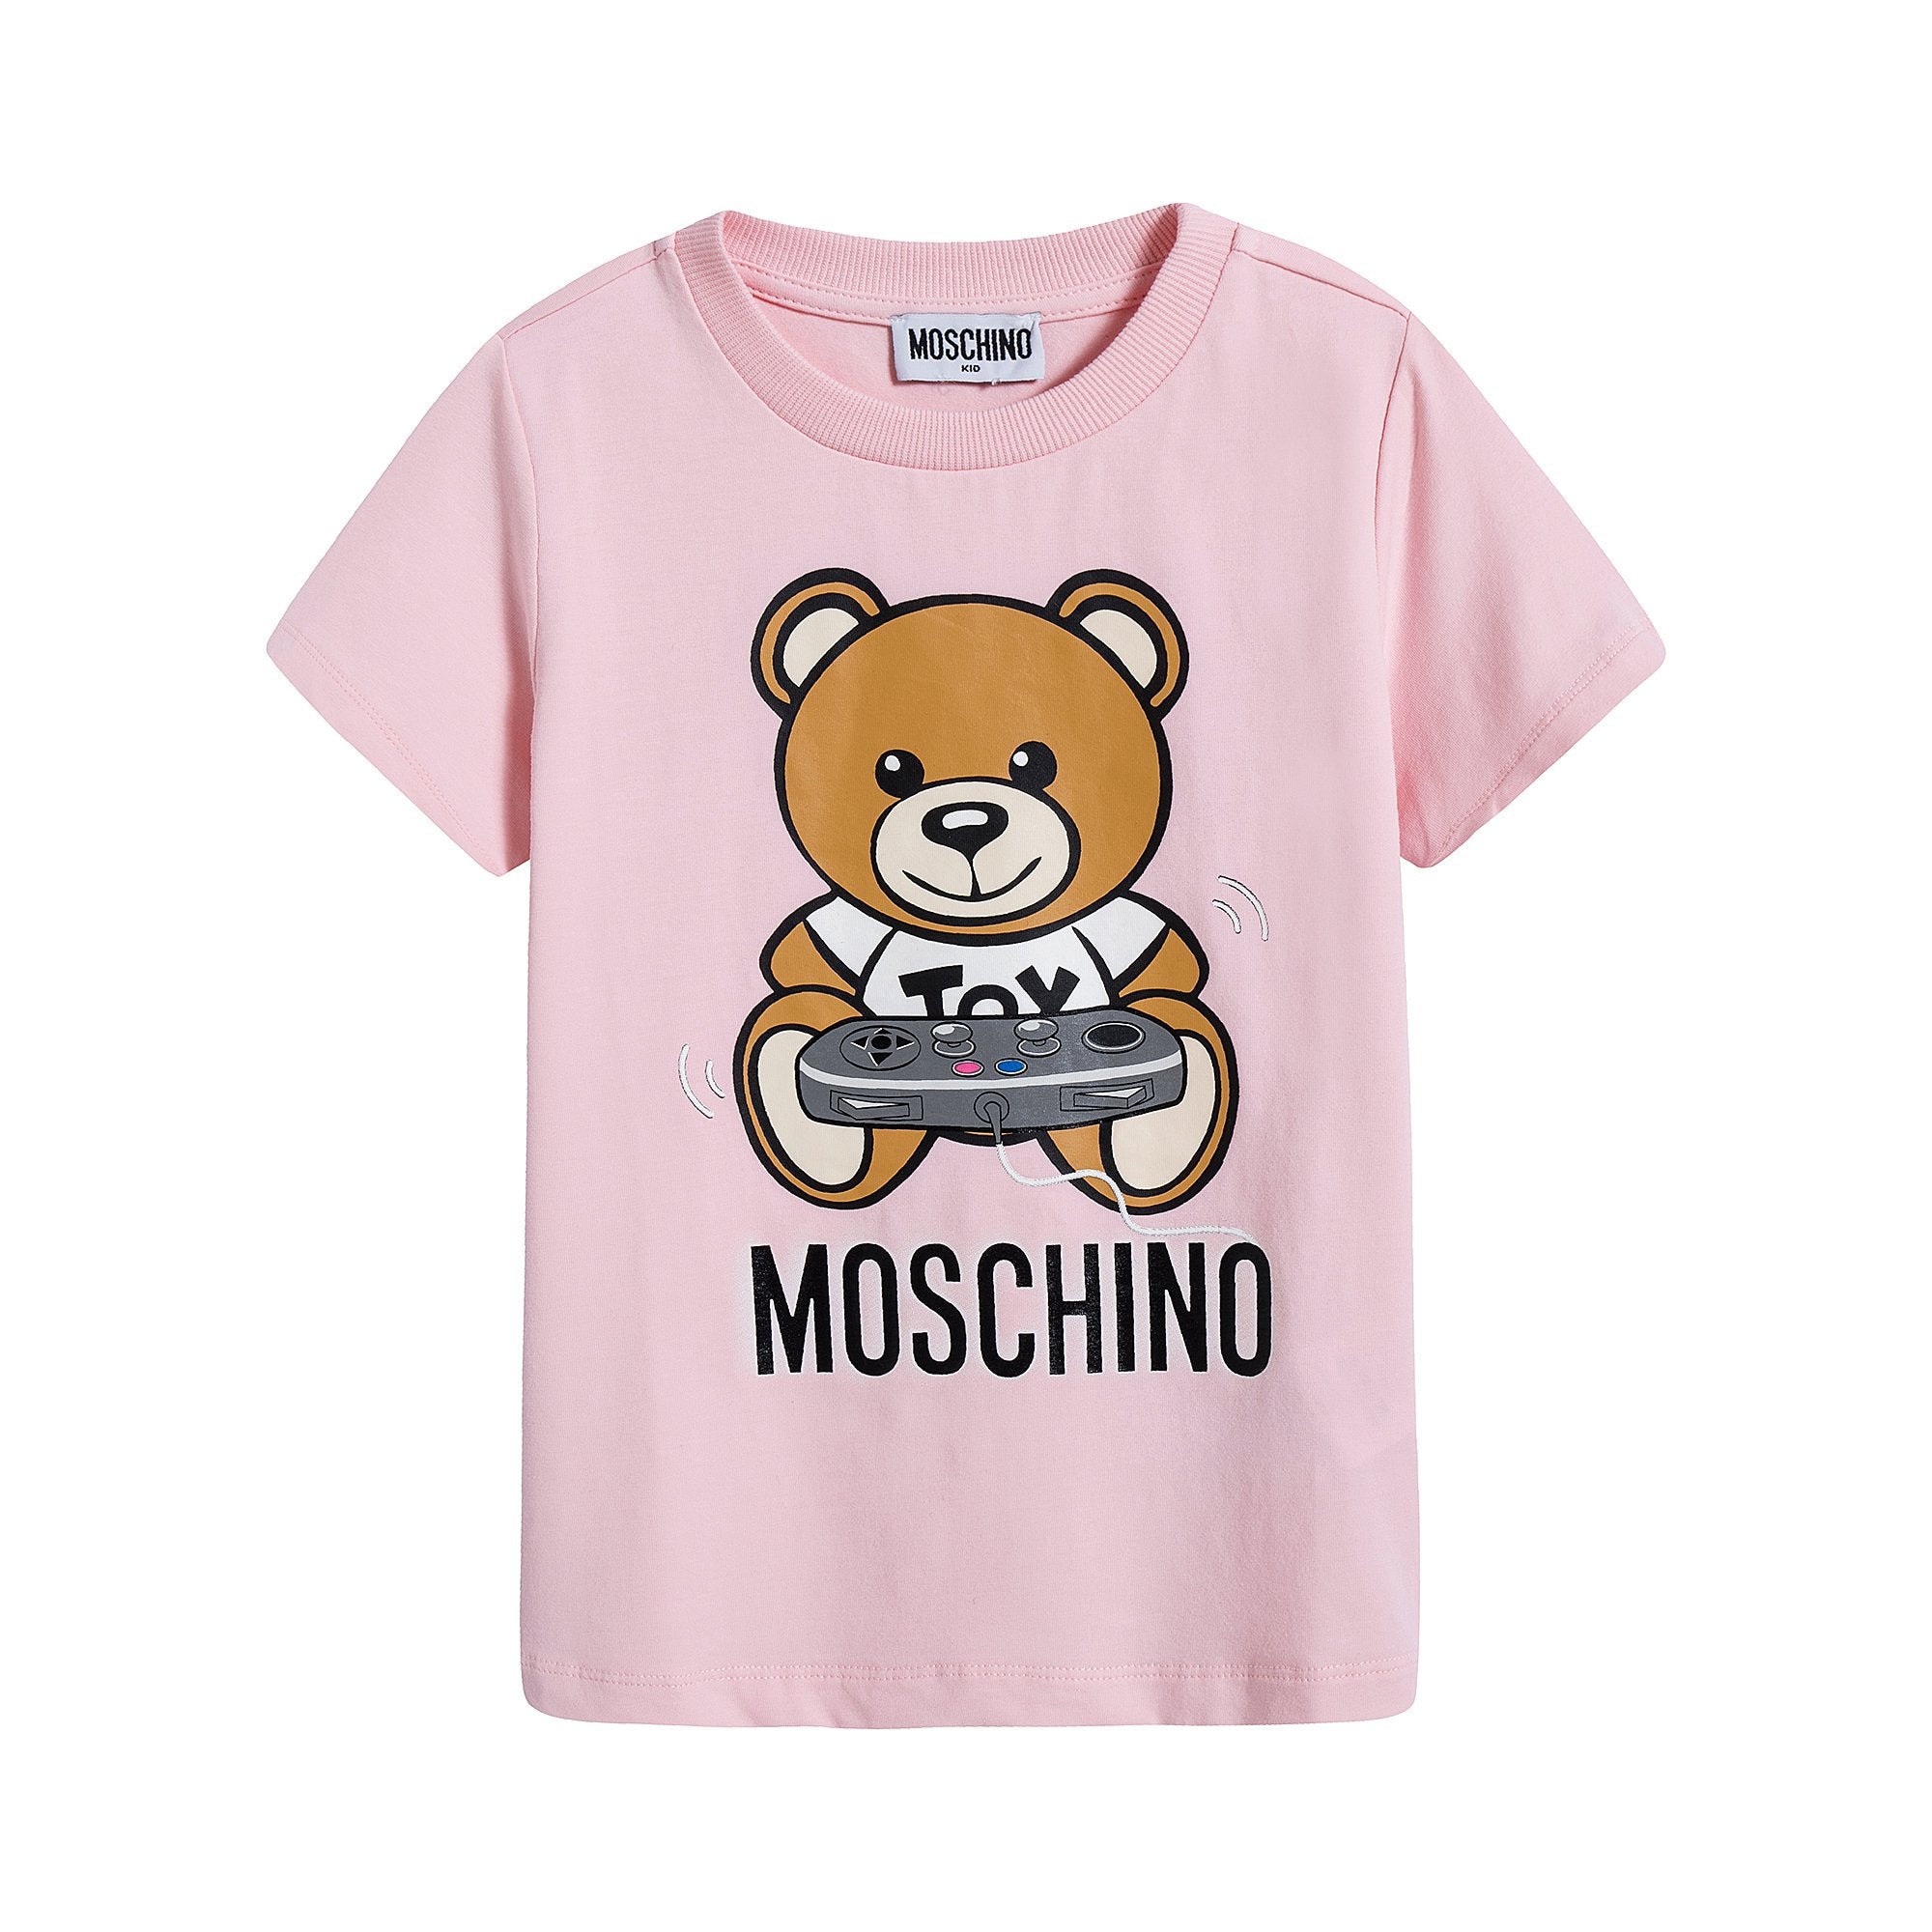 Girls Pink Teddy T-Shirt